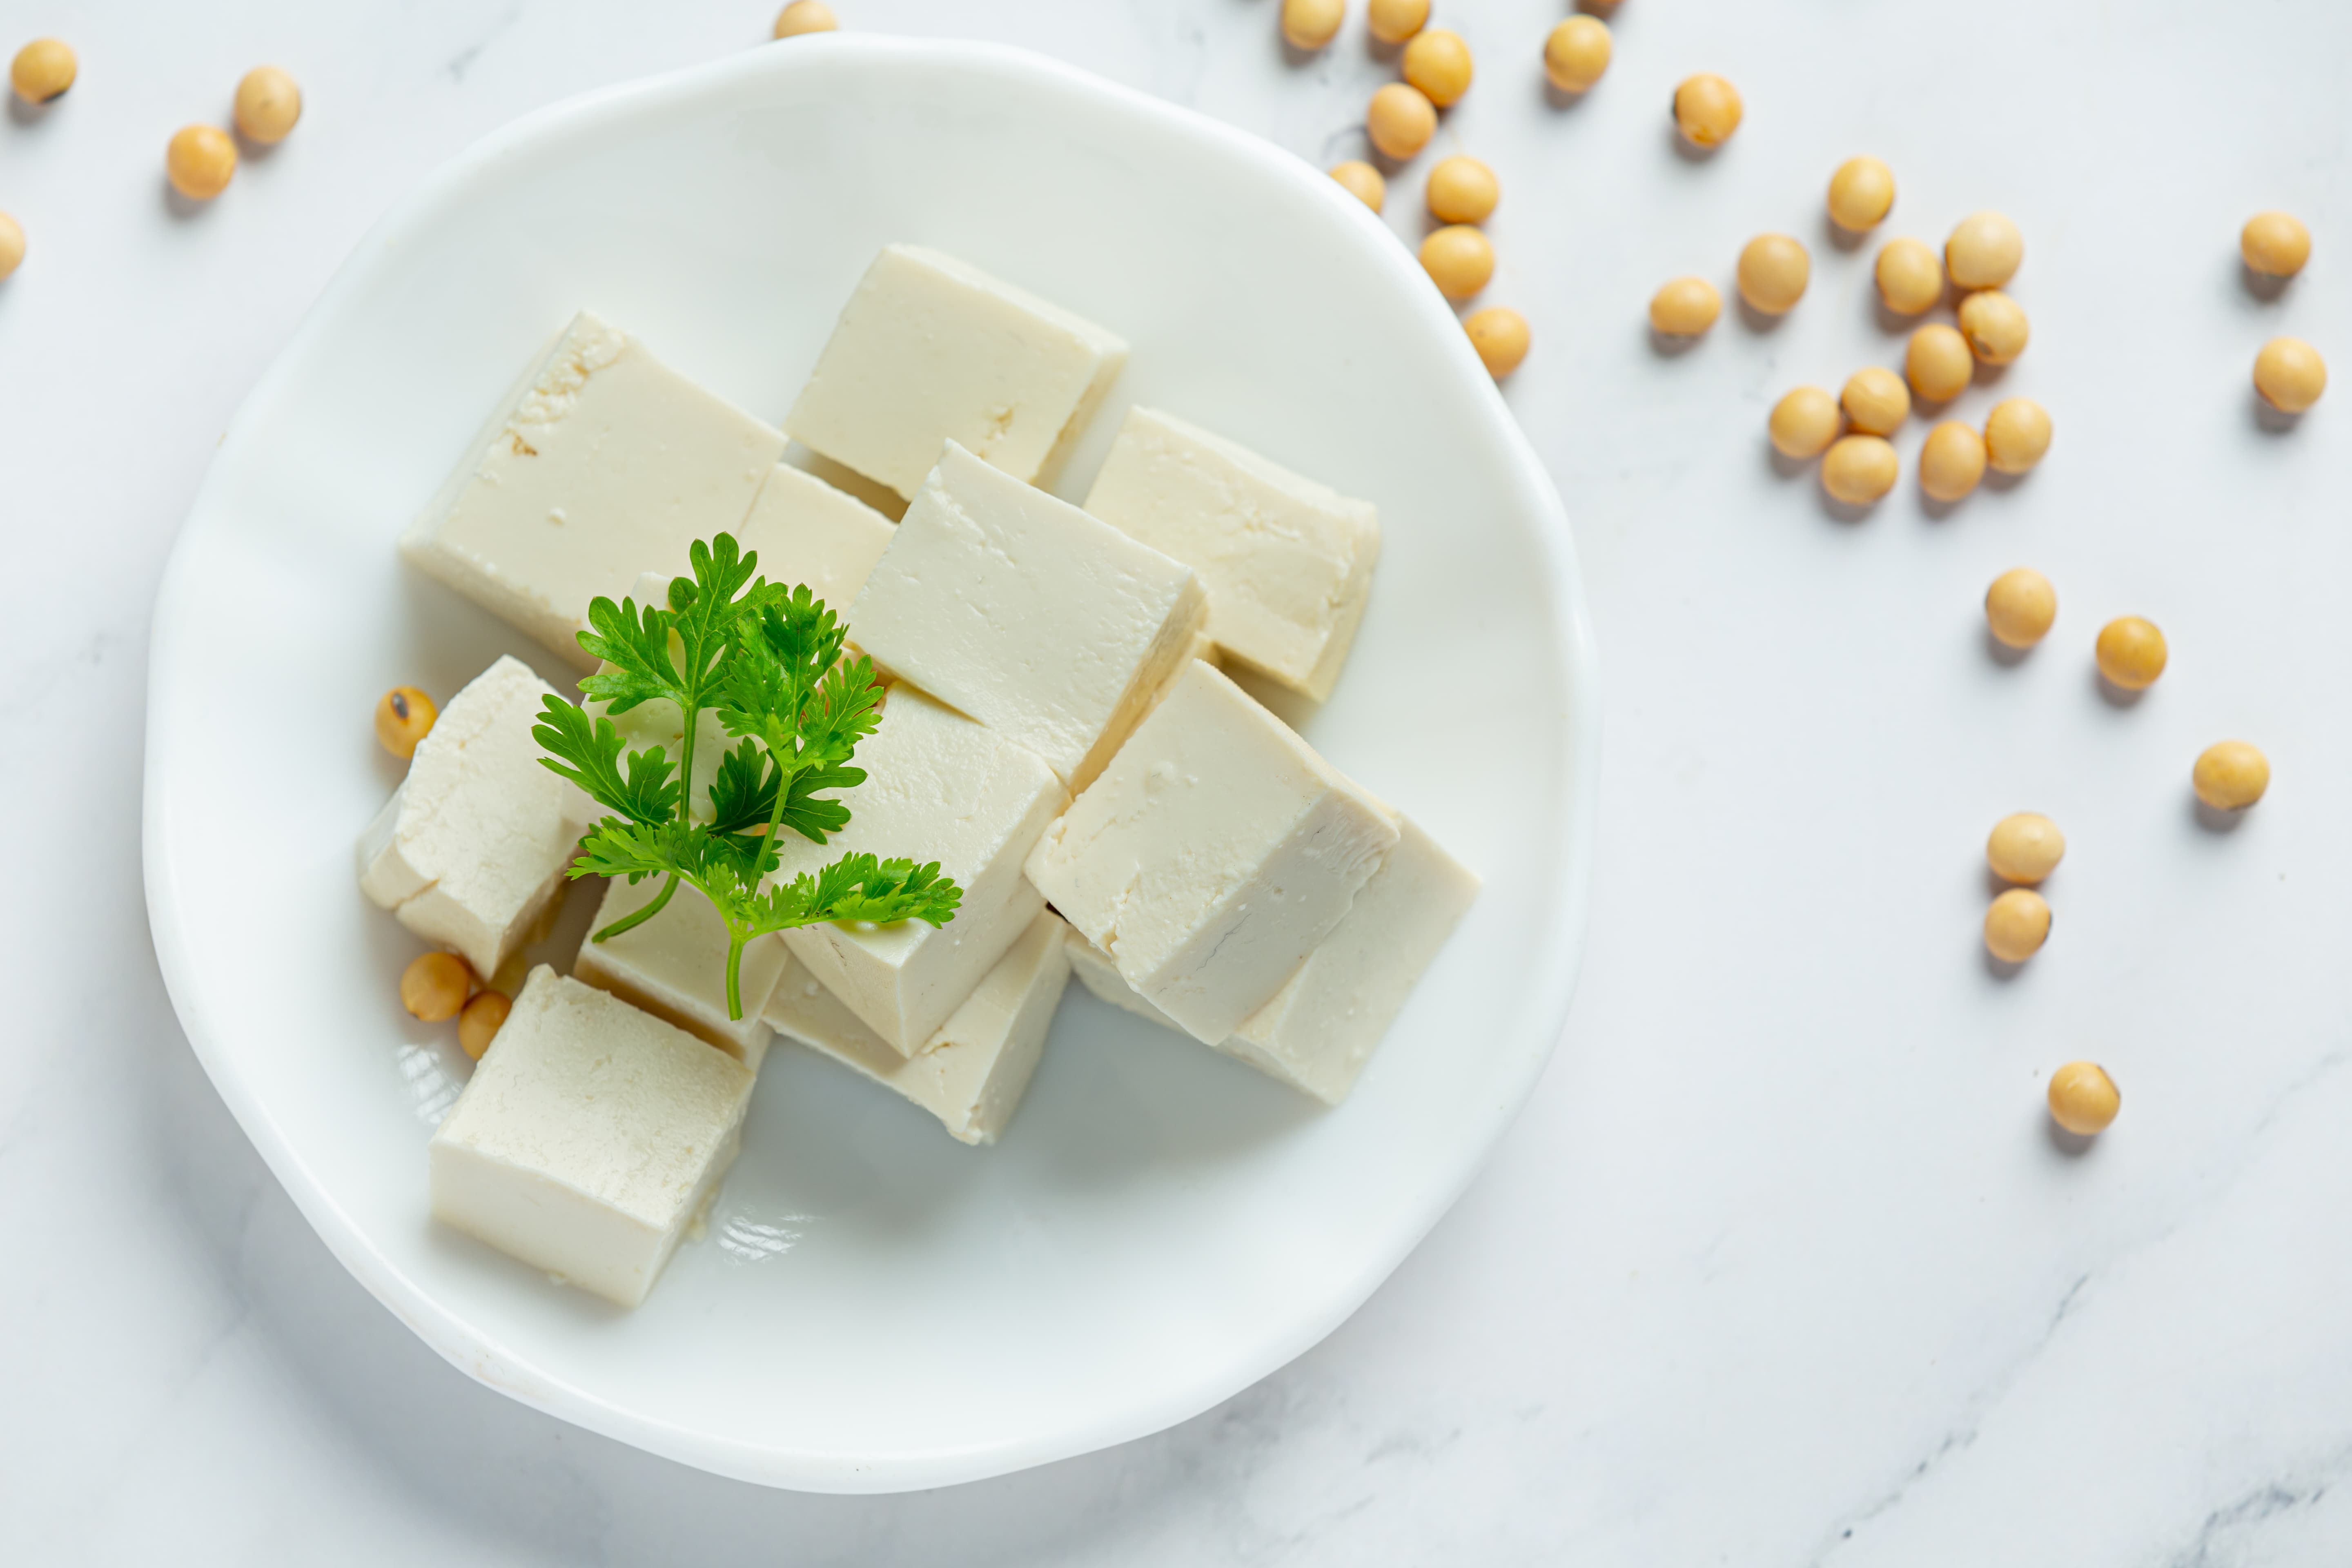 Food-grade calcium sulphate for toufu